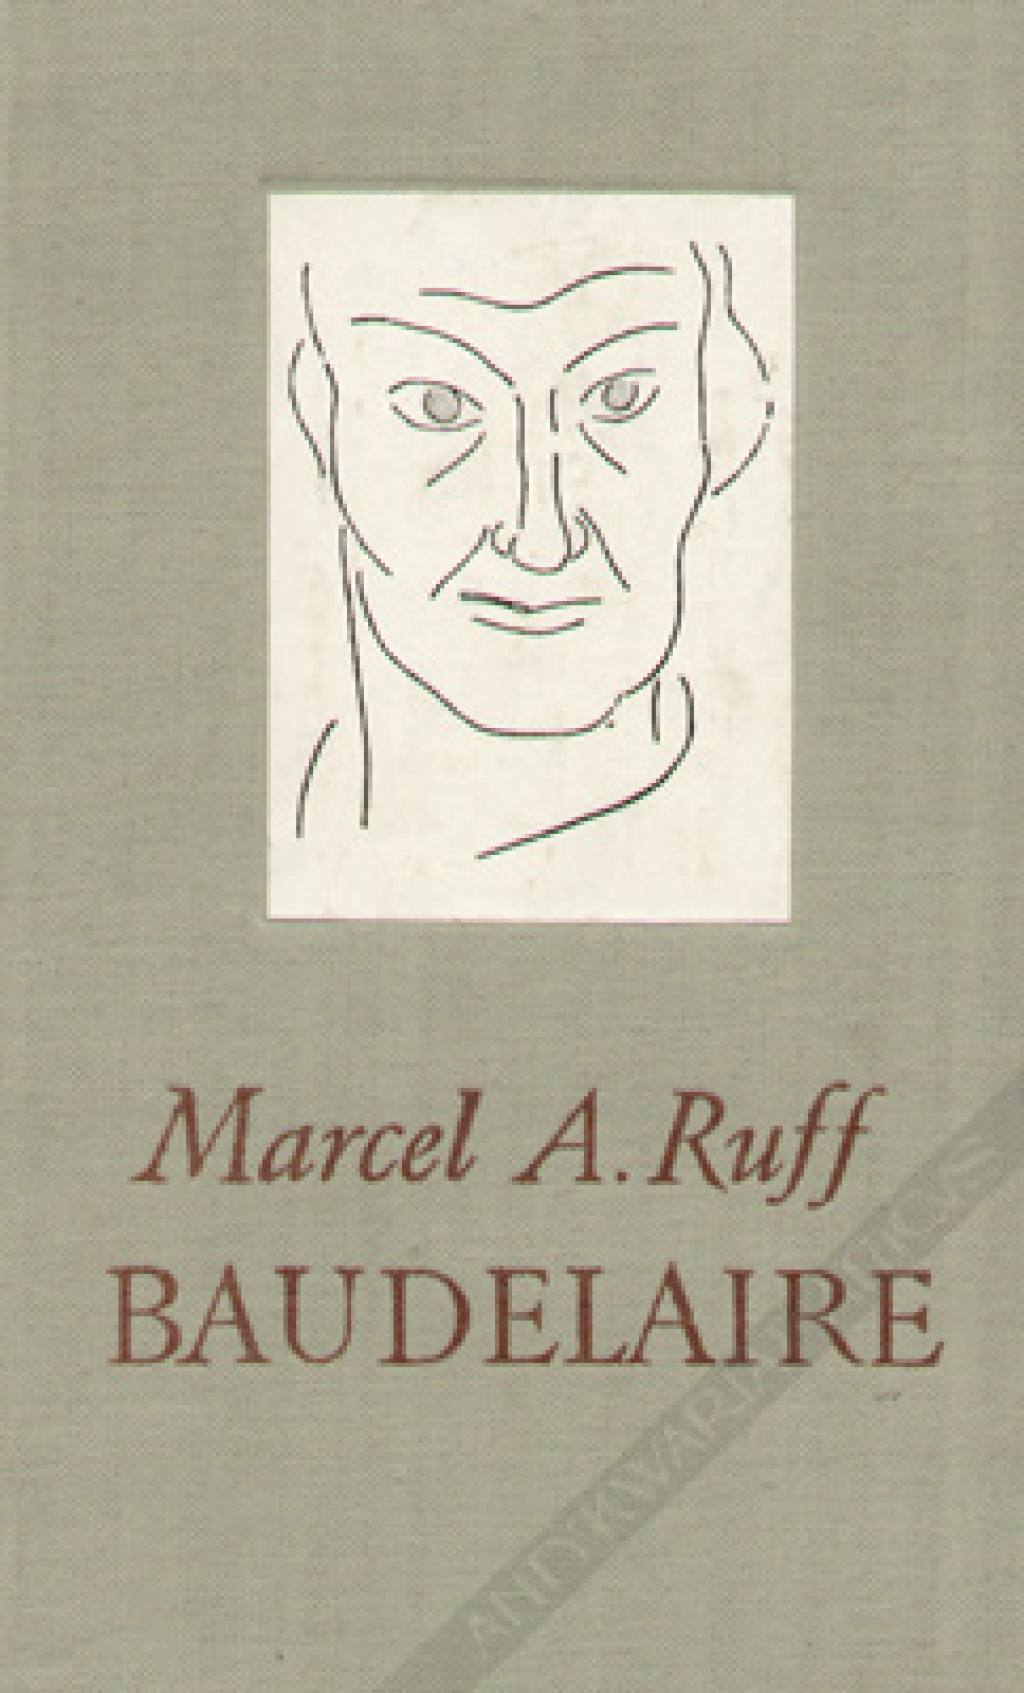 Baudelaire  [egz. z księgozbioru J. Łojka]